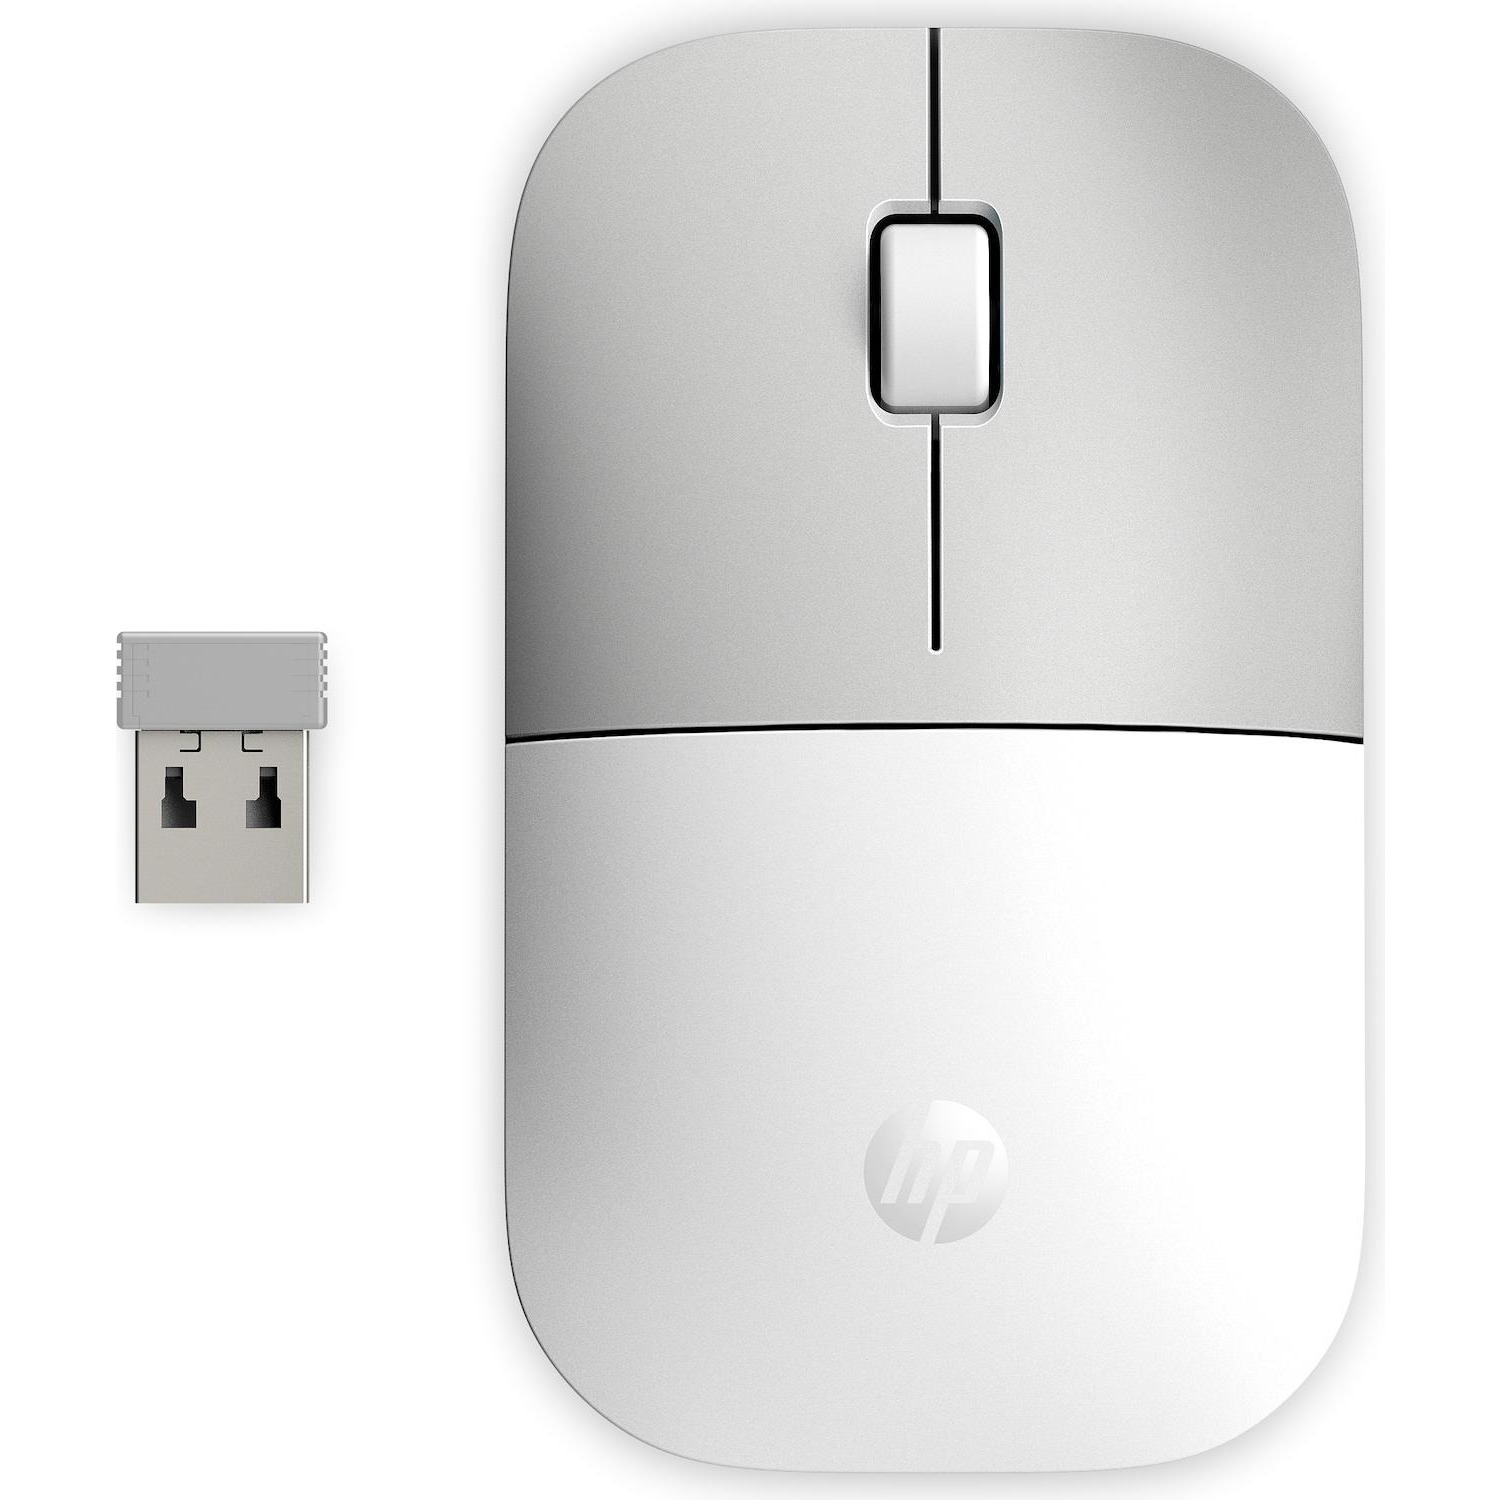 Immagine per Mouse HP wireless Z3700 ceramic da DIMOStore